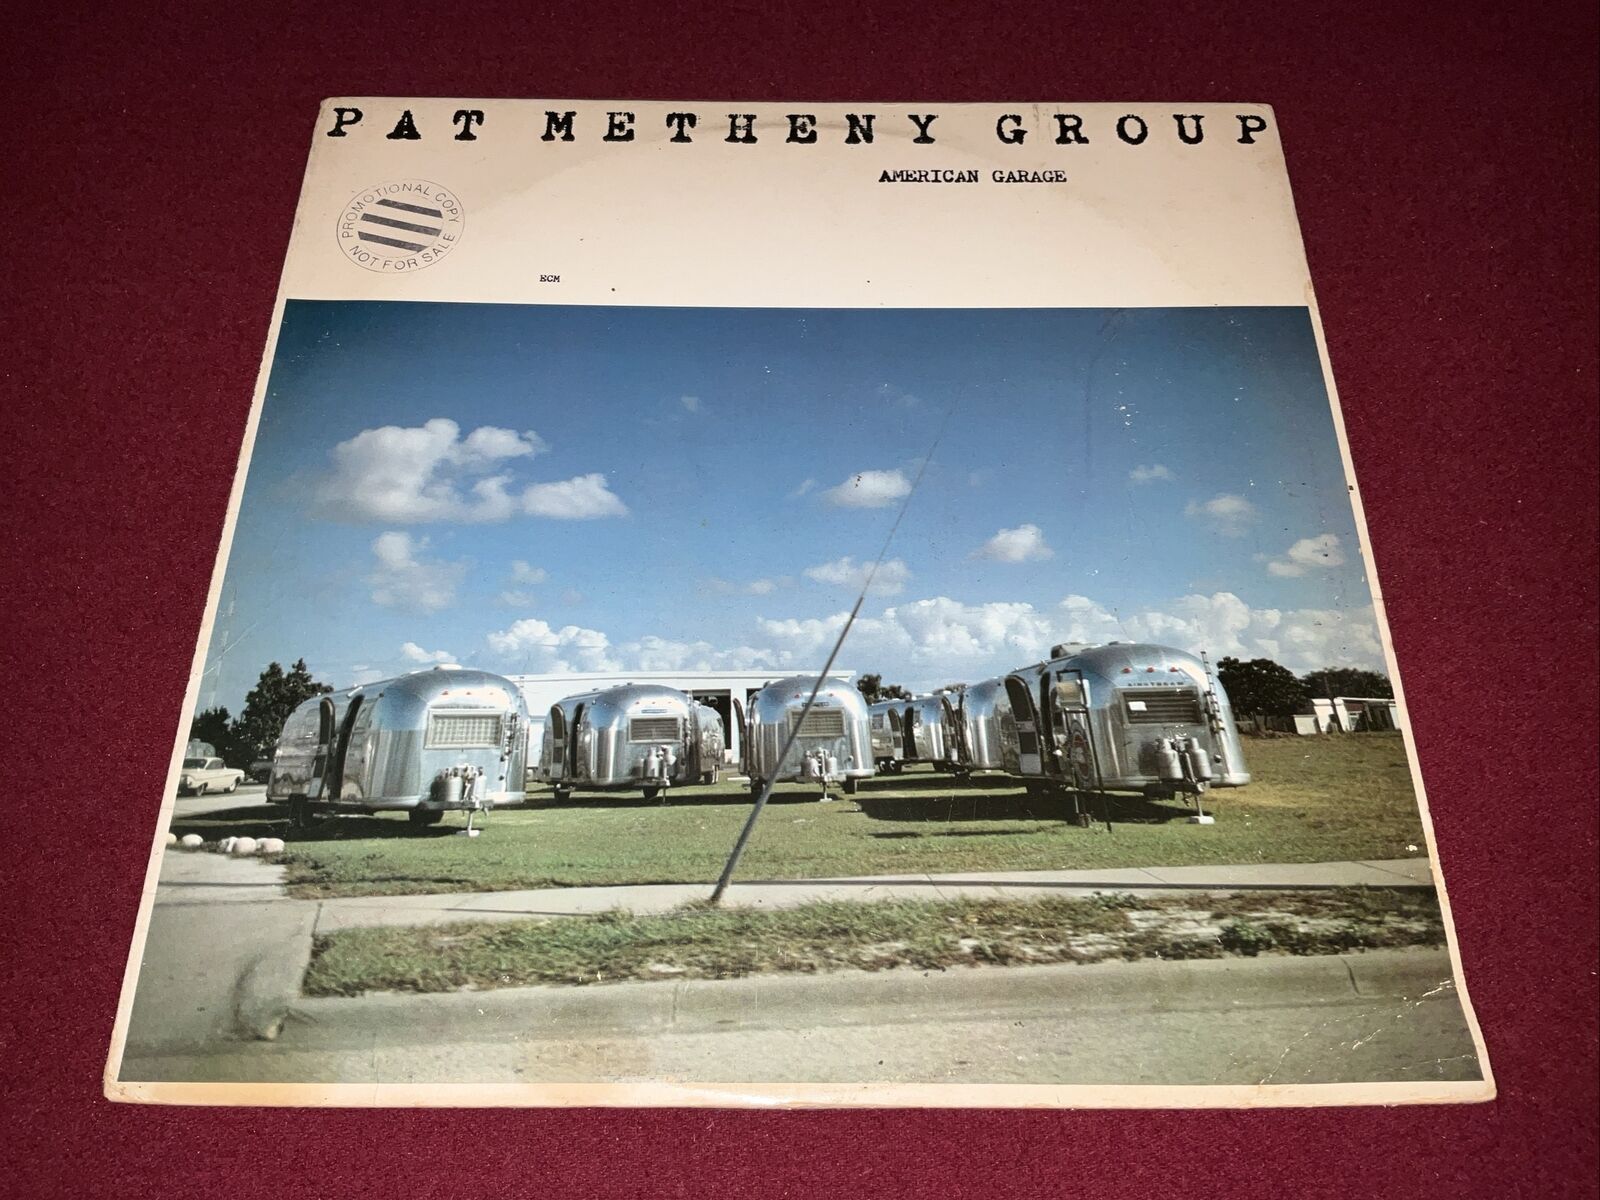 Pat Metheny Group American Garage Vinyl LP ECM-1-1155 Ultrasonic Cleaned Promo